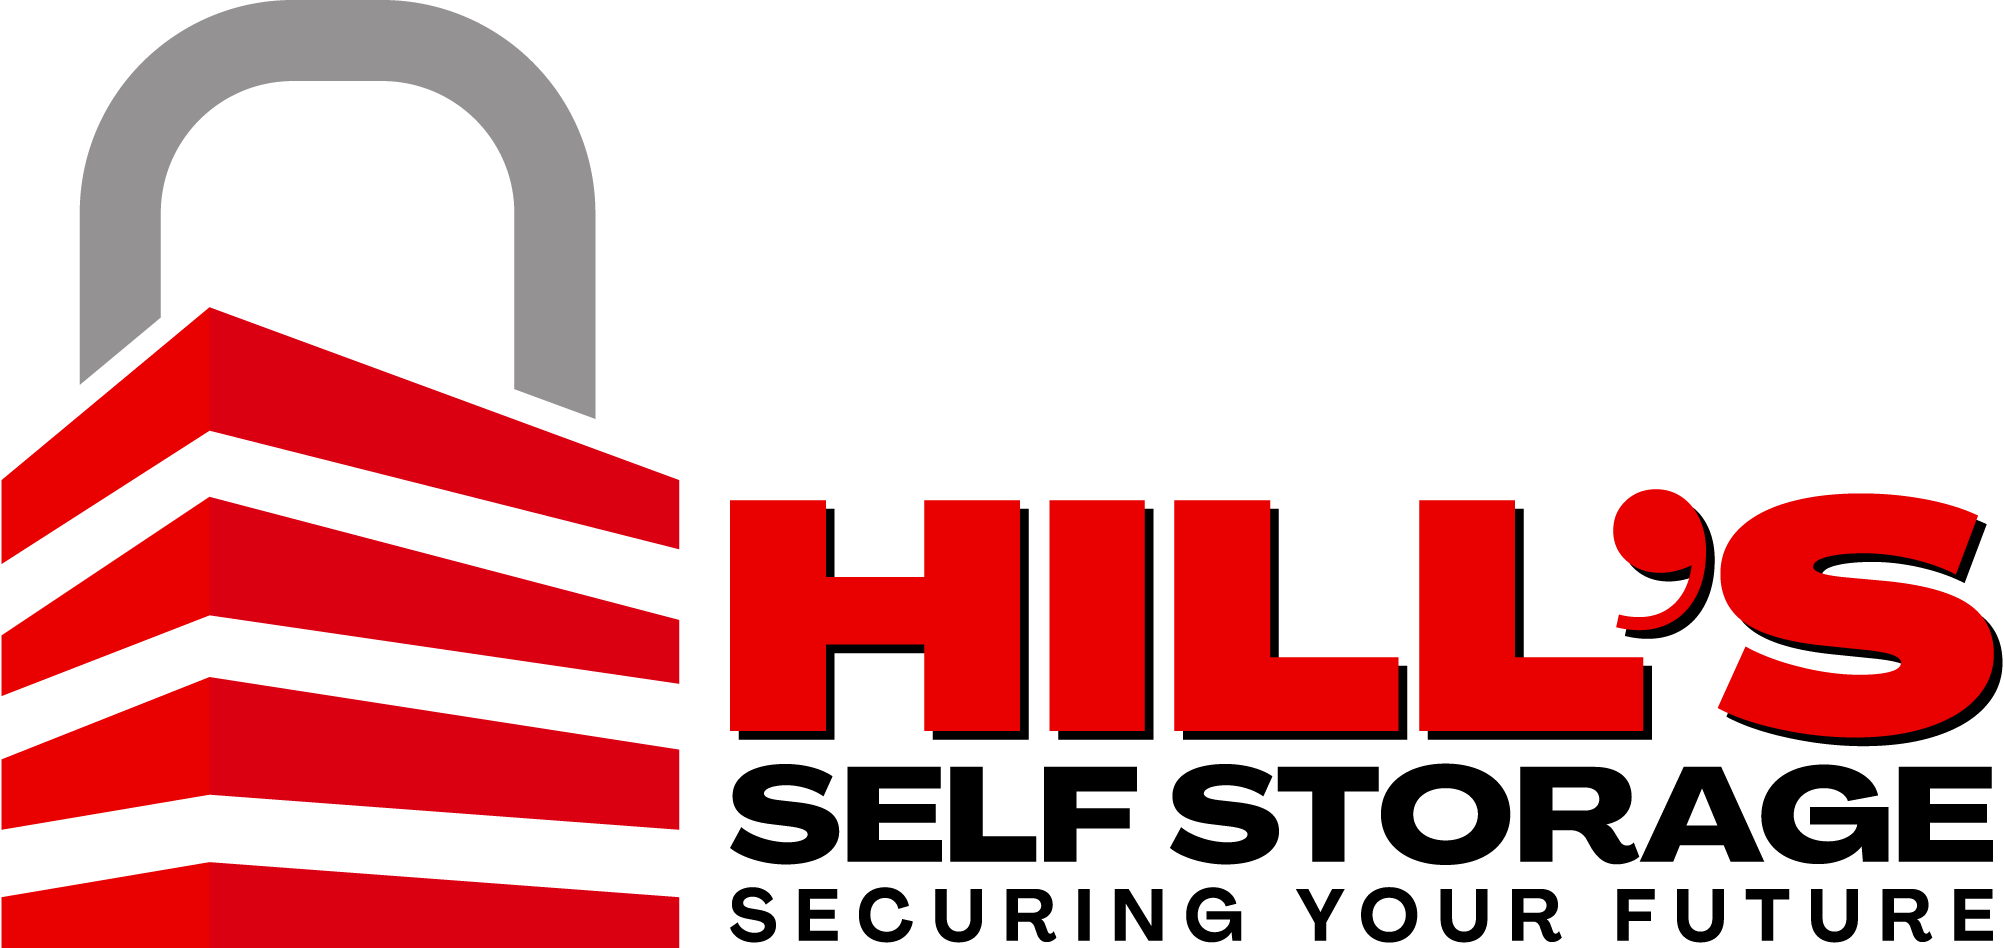 Hill's Self Storage